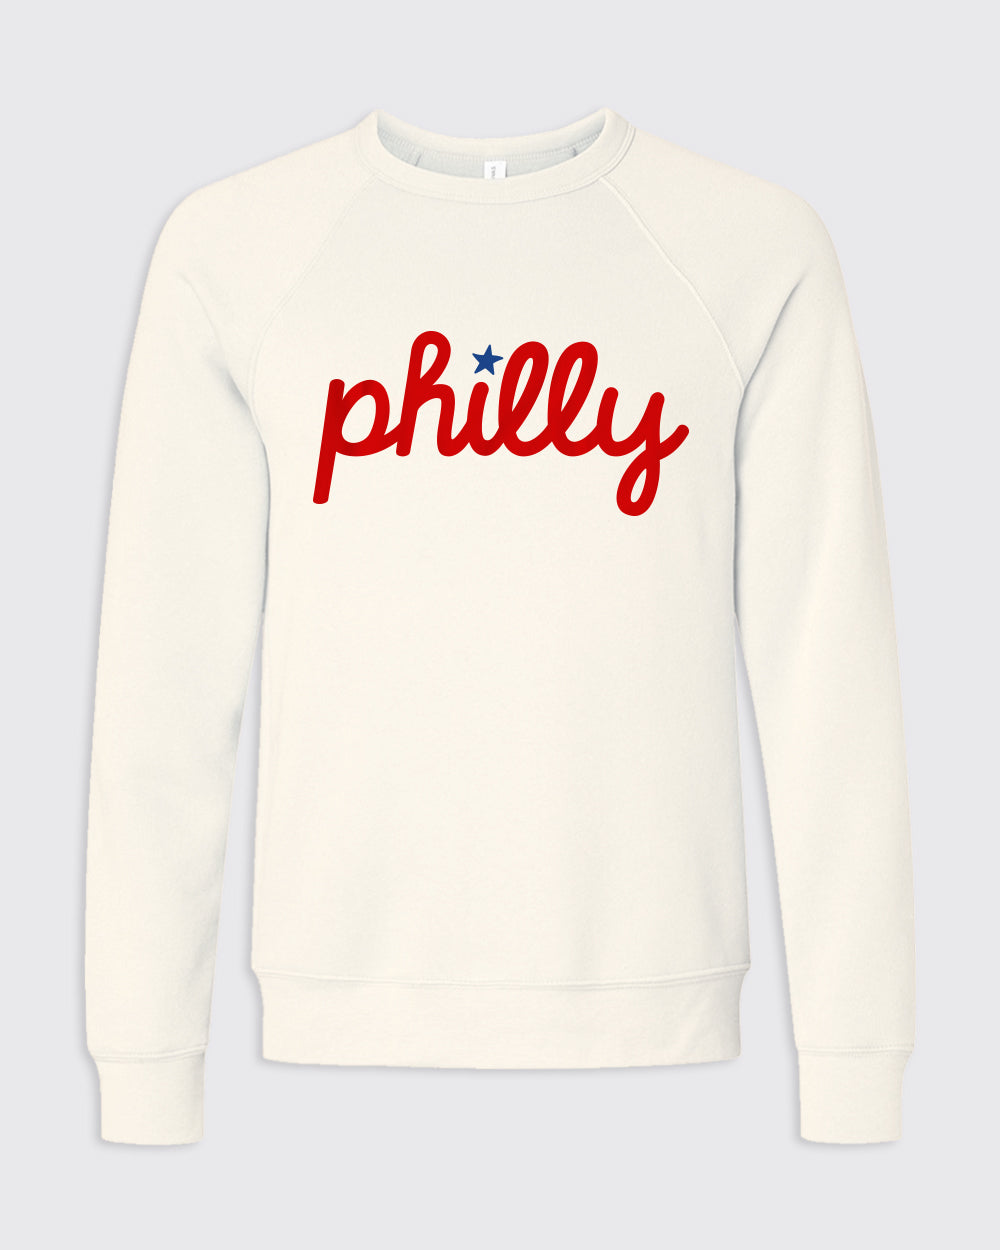 Philadelphia Phillies Merchandise & Gifts - SportsUnlimited.com